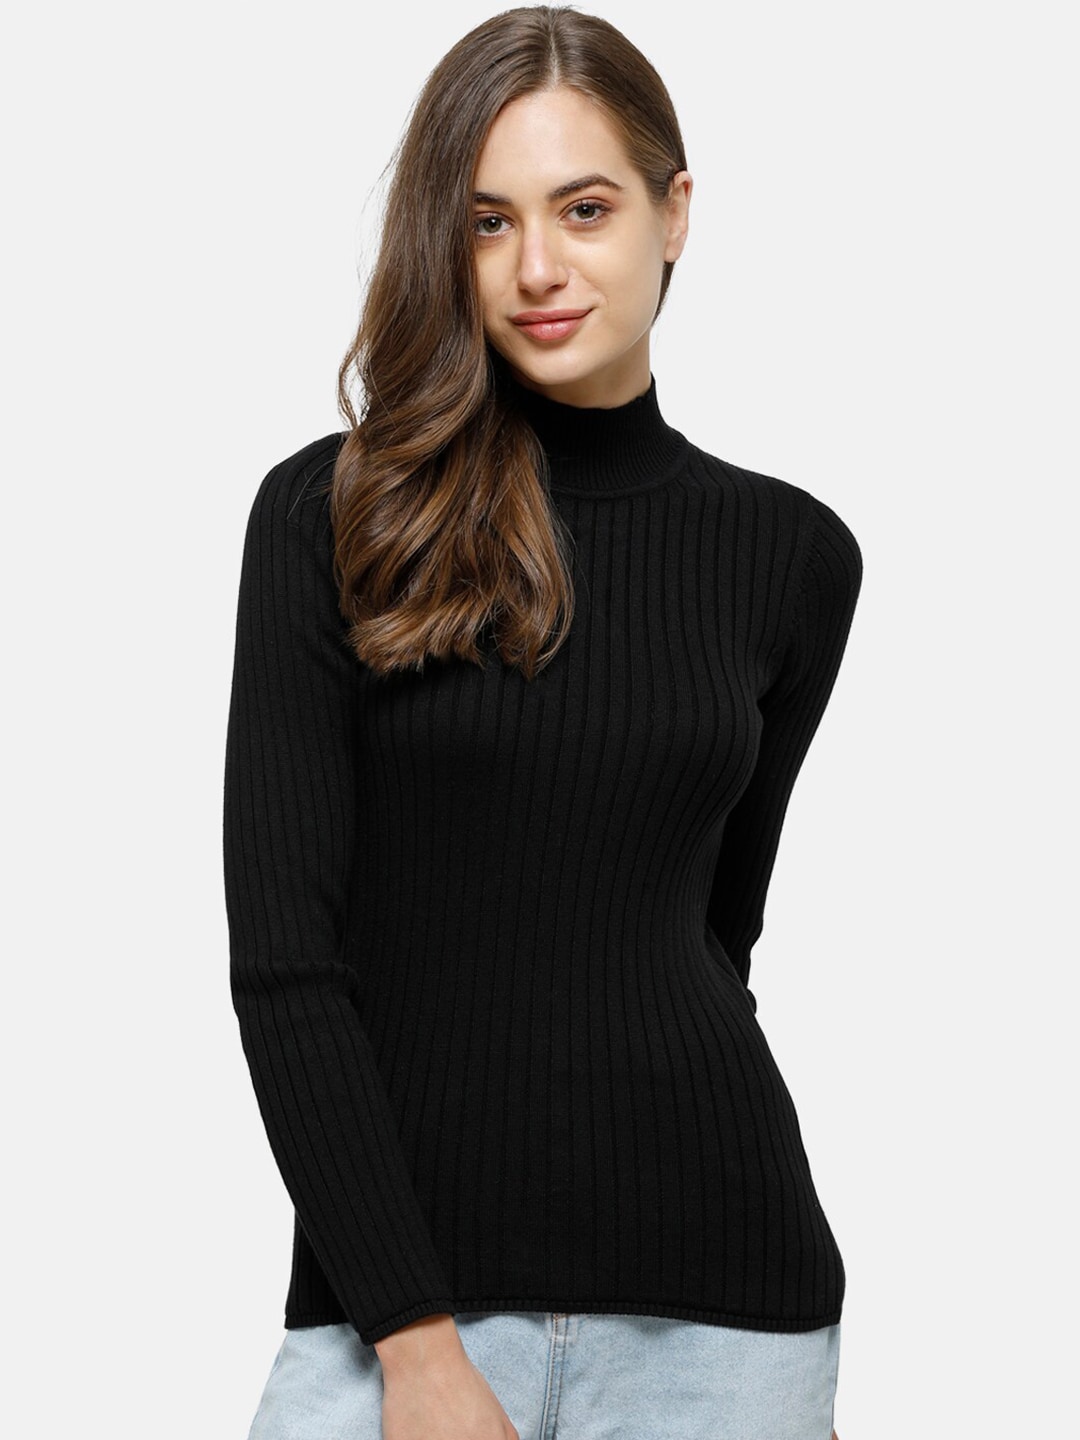 98 Degree North Women Black Self Design Turtle Neck Sweater Price in India